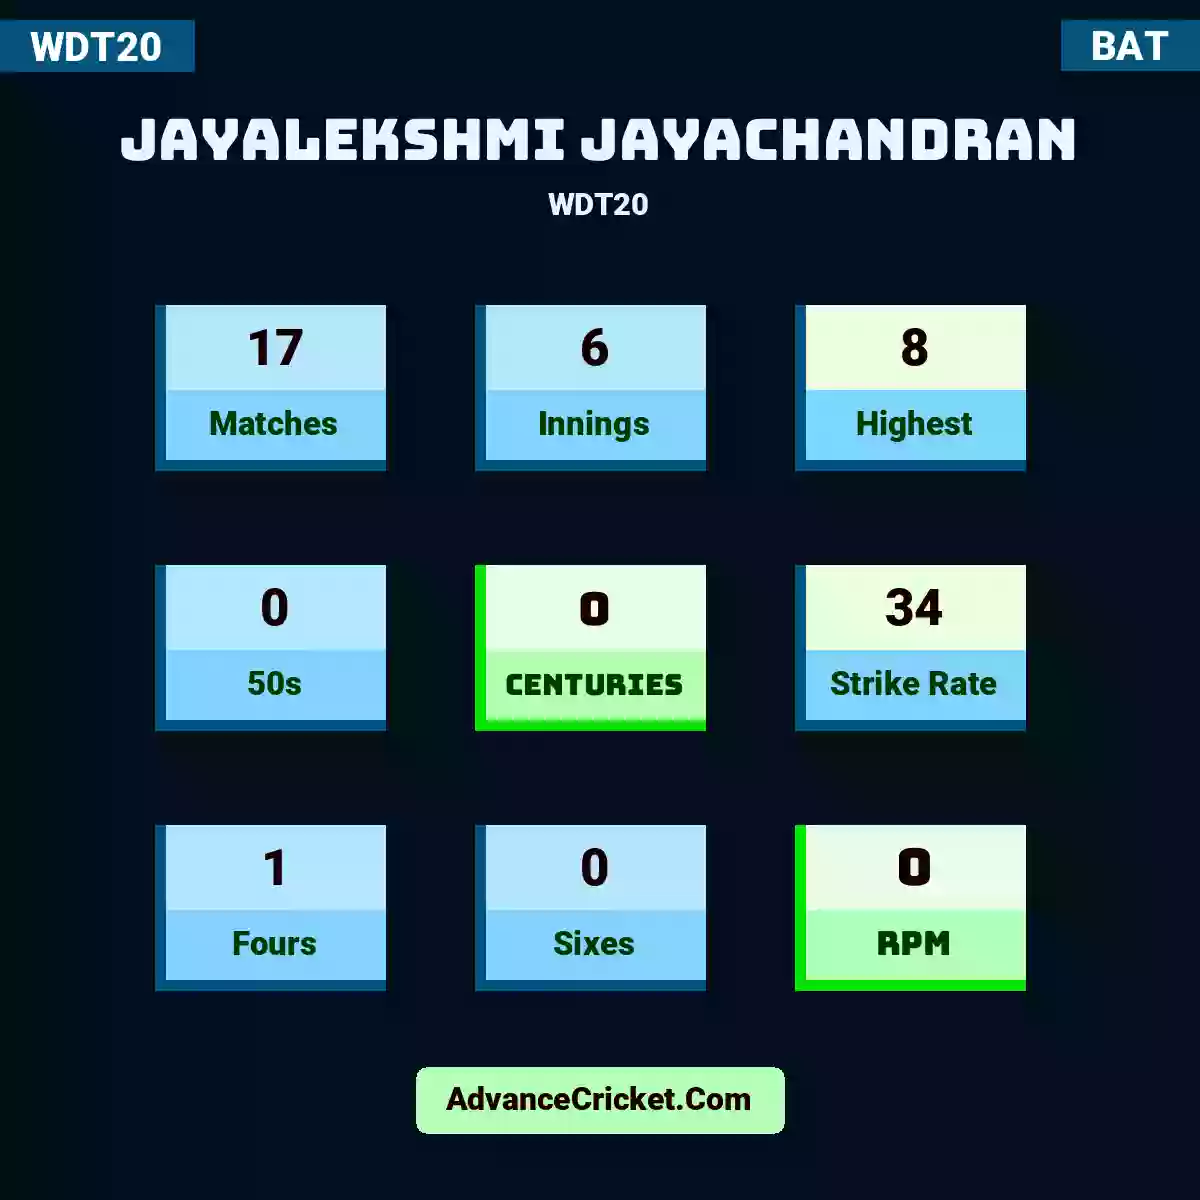 Jayalekshmi Jayachandran WDT20 , Jayalekshmi Jayachandran played 17 matches, scored 8 runs as highest, 0 half-centuries, and 0 centuries, with a strike rate of 34. J.Jayachandran hit 1 fours and 0 sixes, with an RPM of 0.